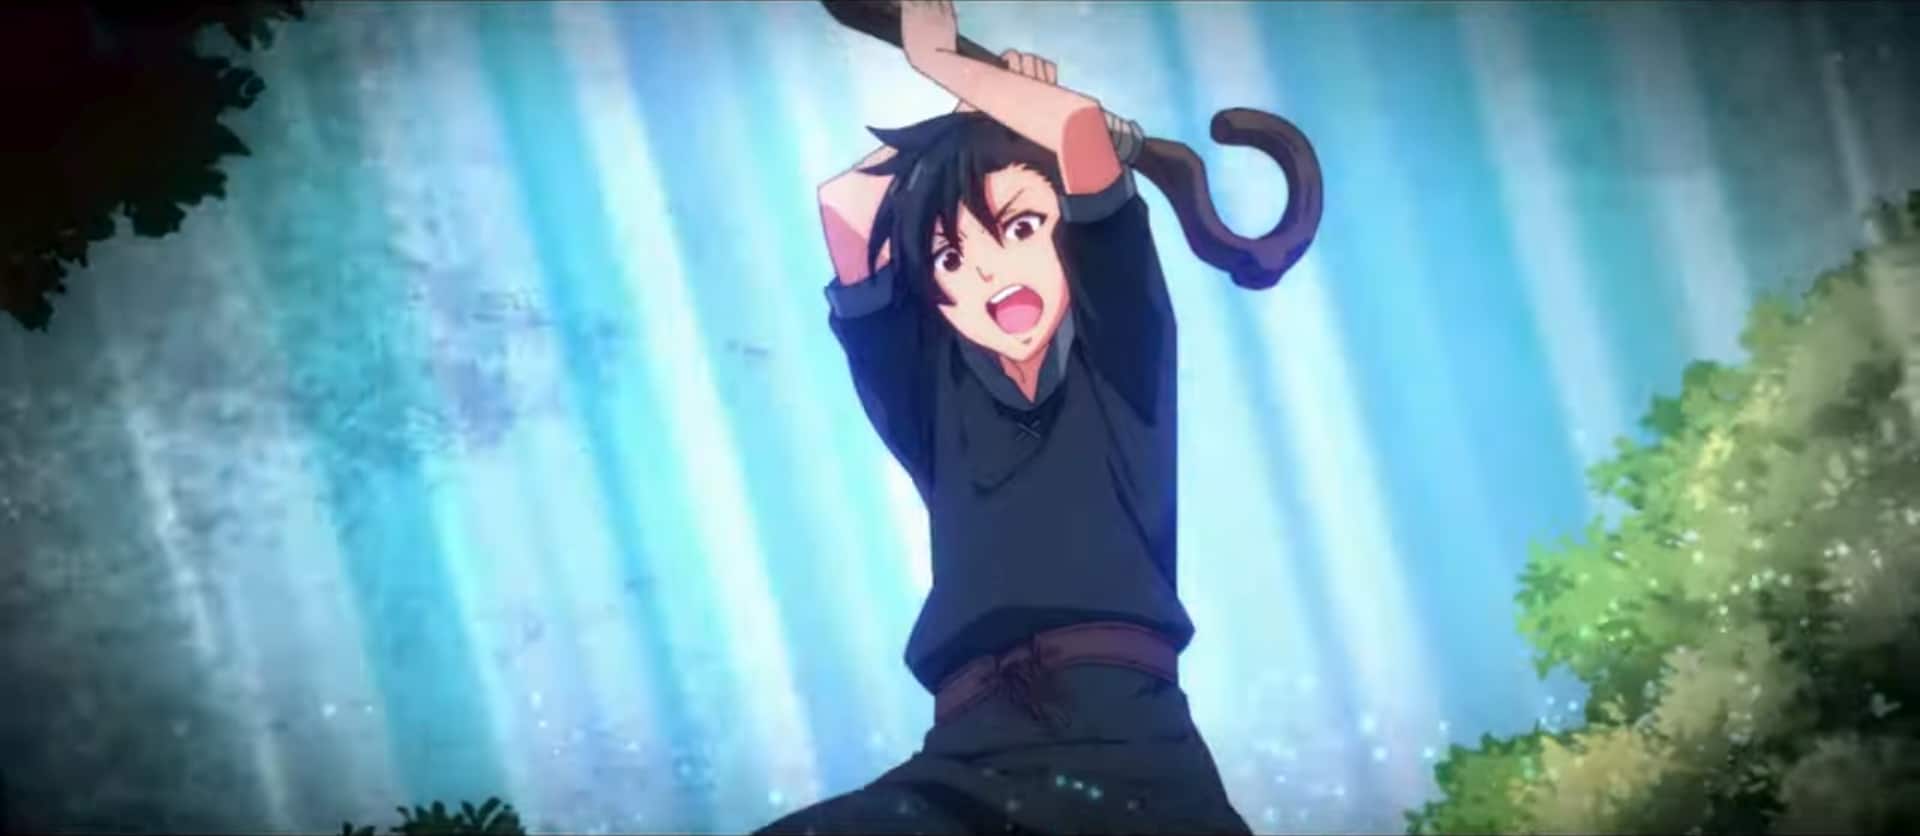 Black Summoner anime release date: Kuro no Shoukanshi anime in 2022